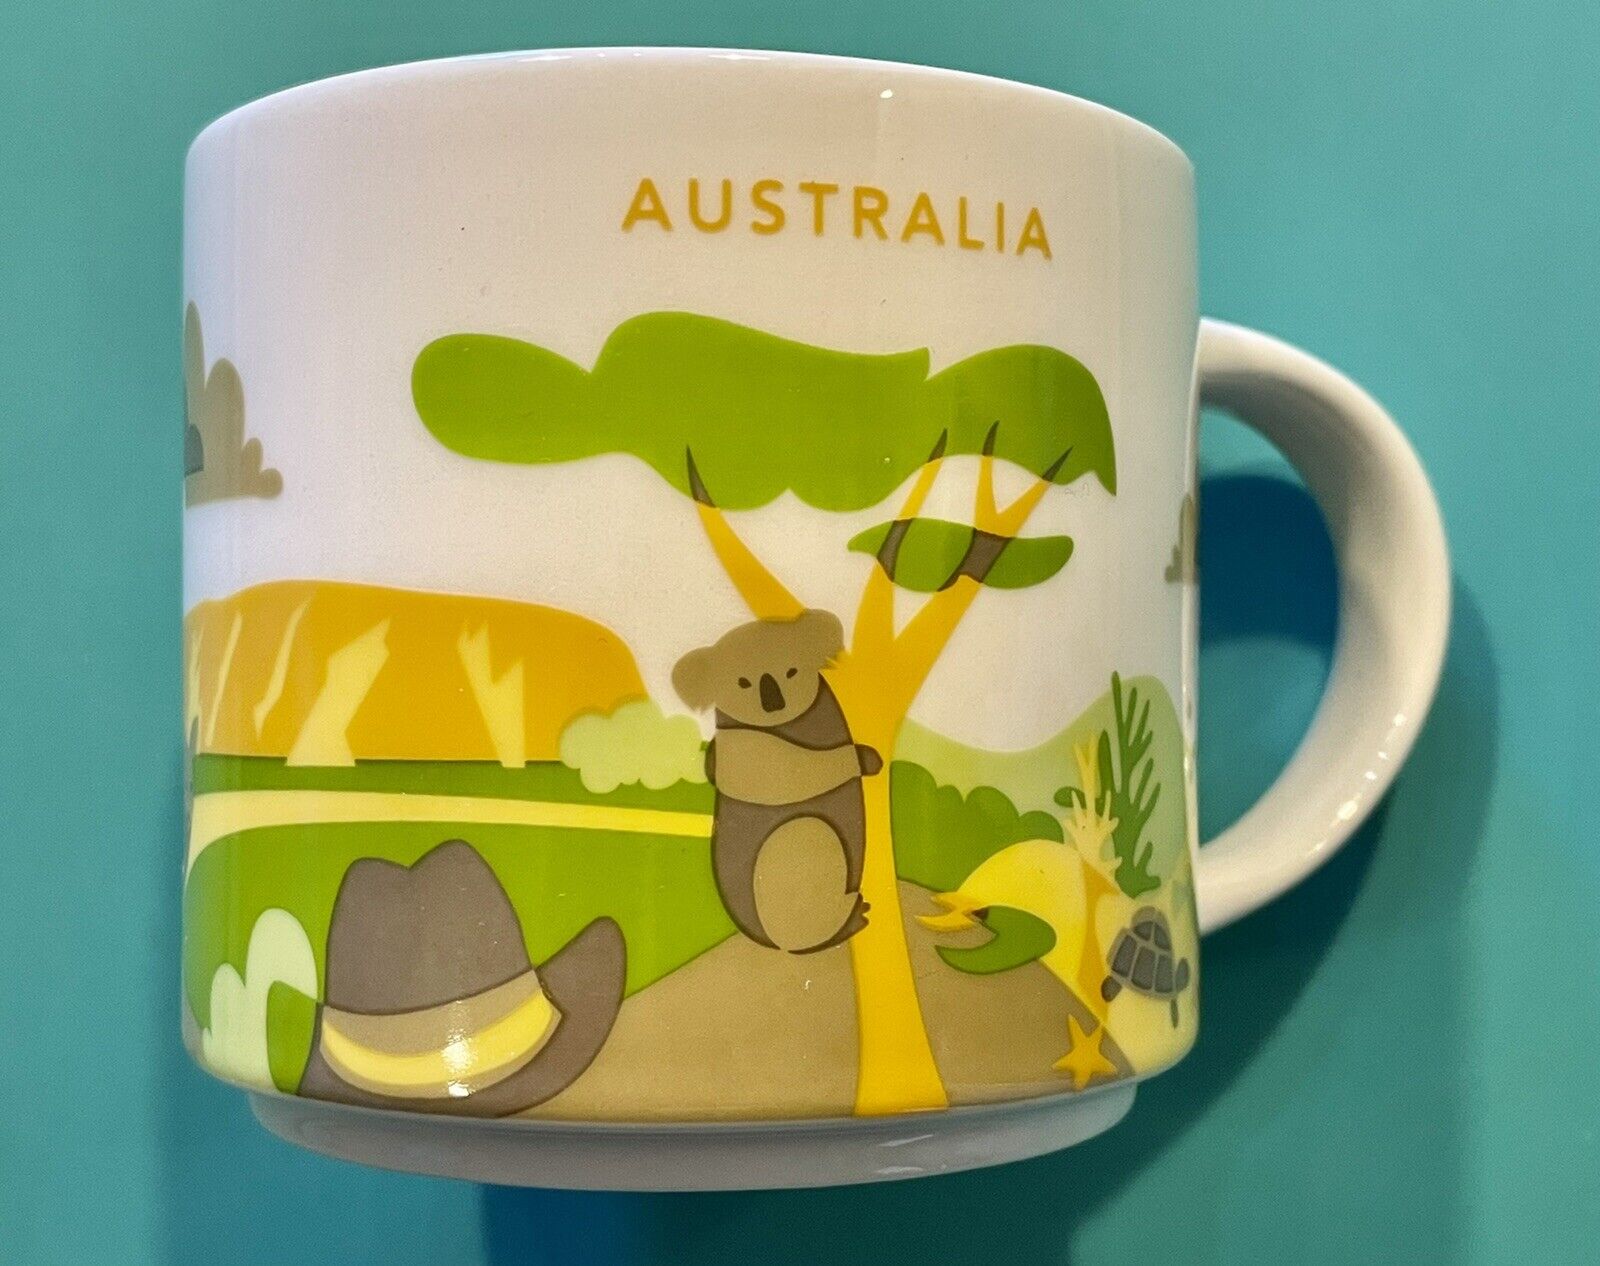 STARBUCKS COFFEE MUG - AUSTRALIA 🇦🇺